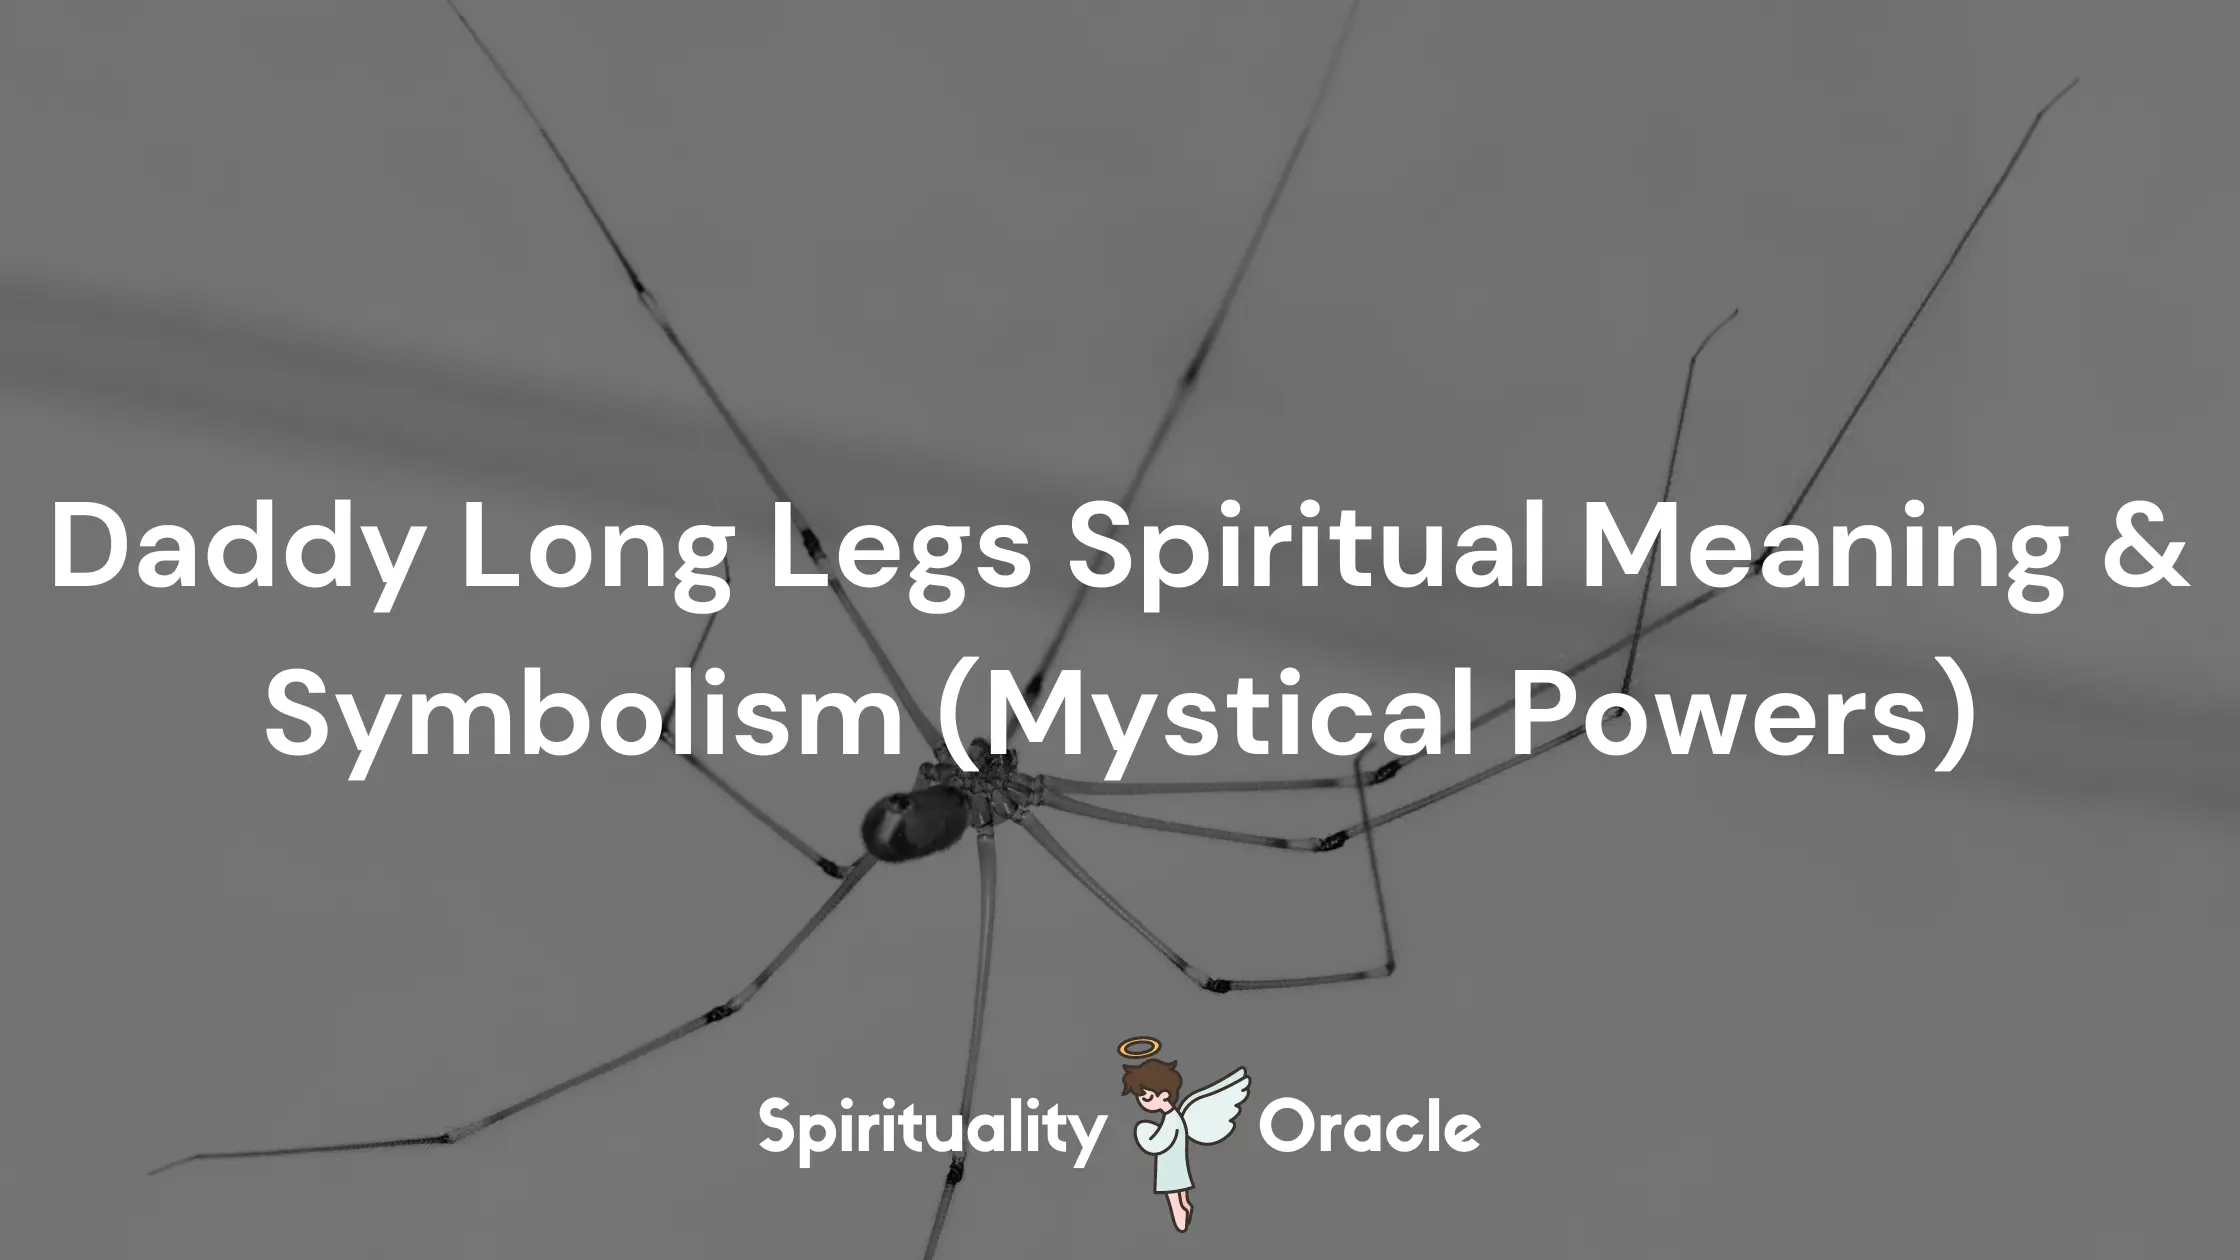 Daddy Long Legs Spiritual Meaning & Symbolism